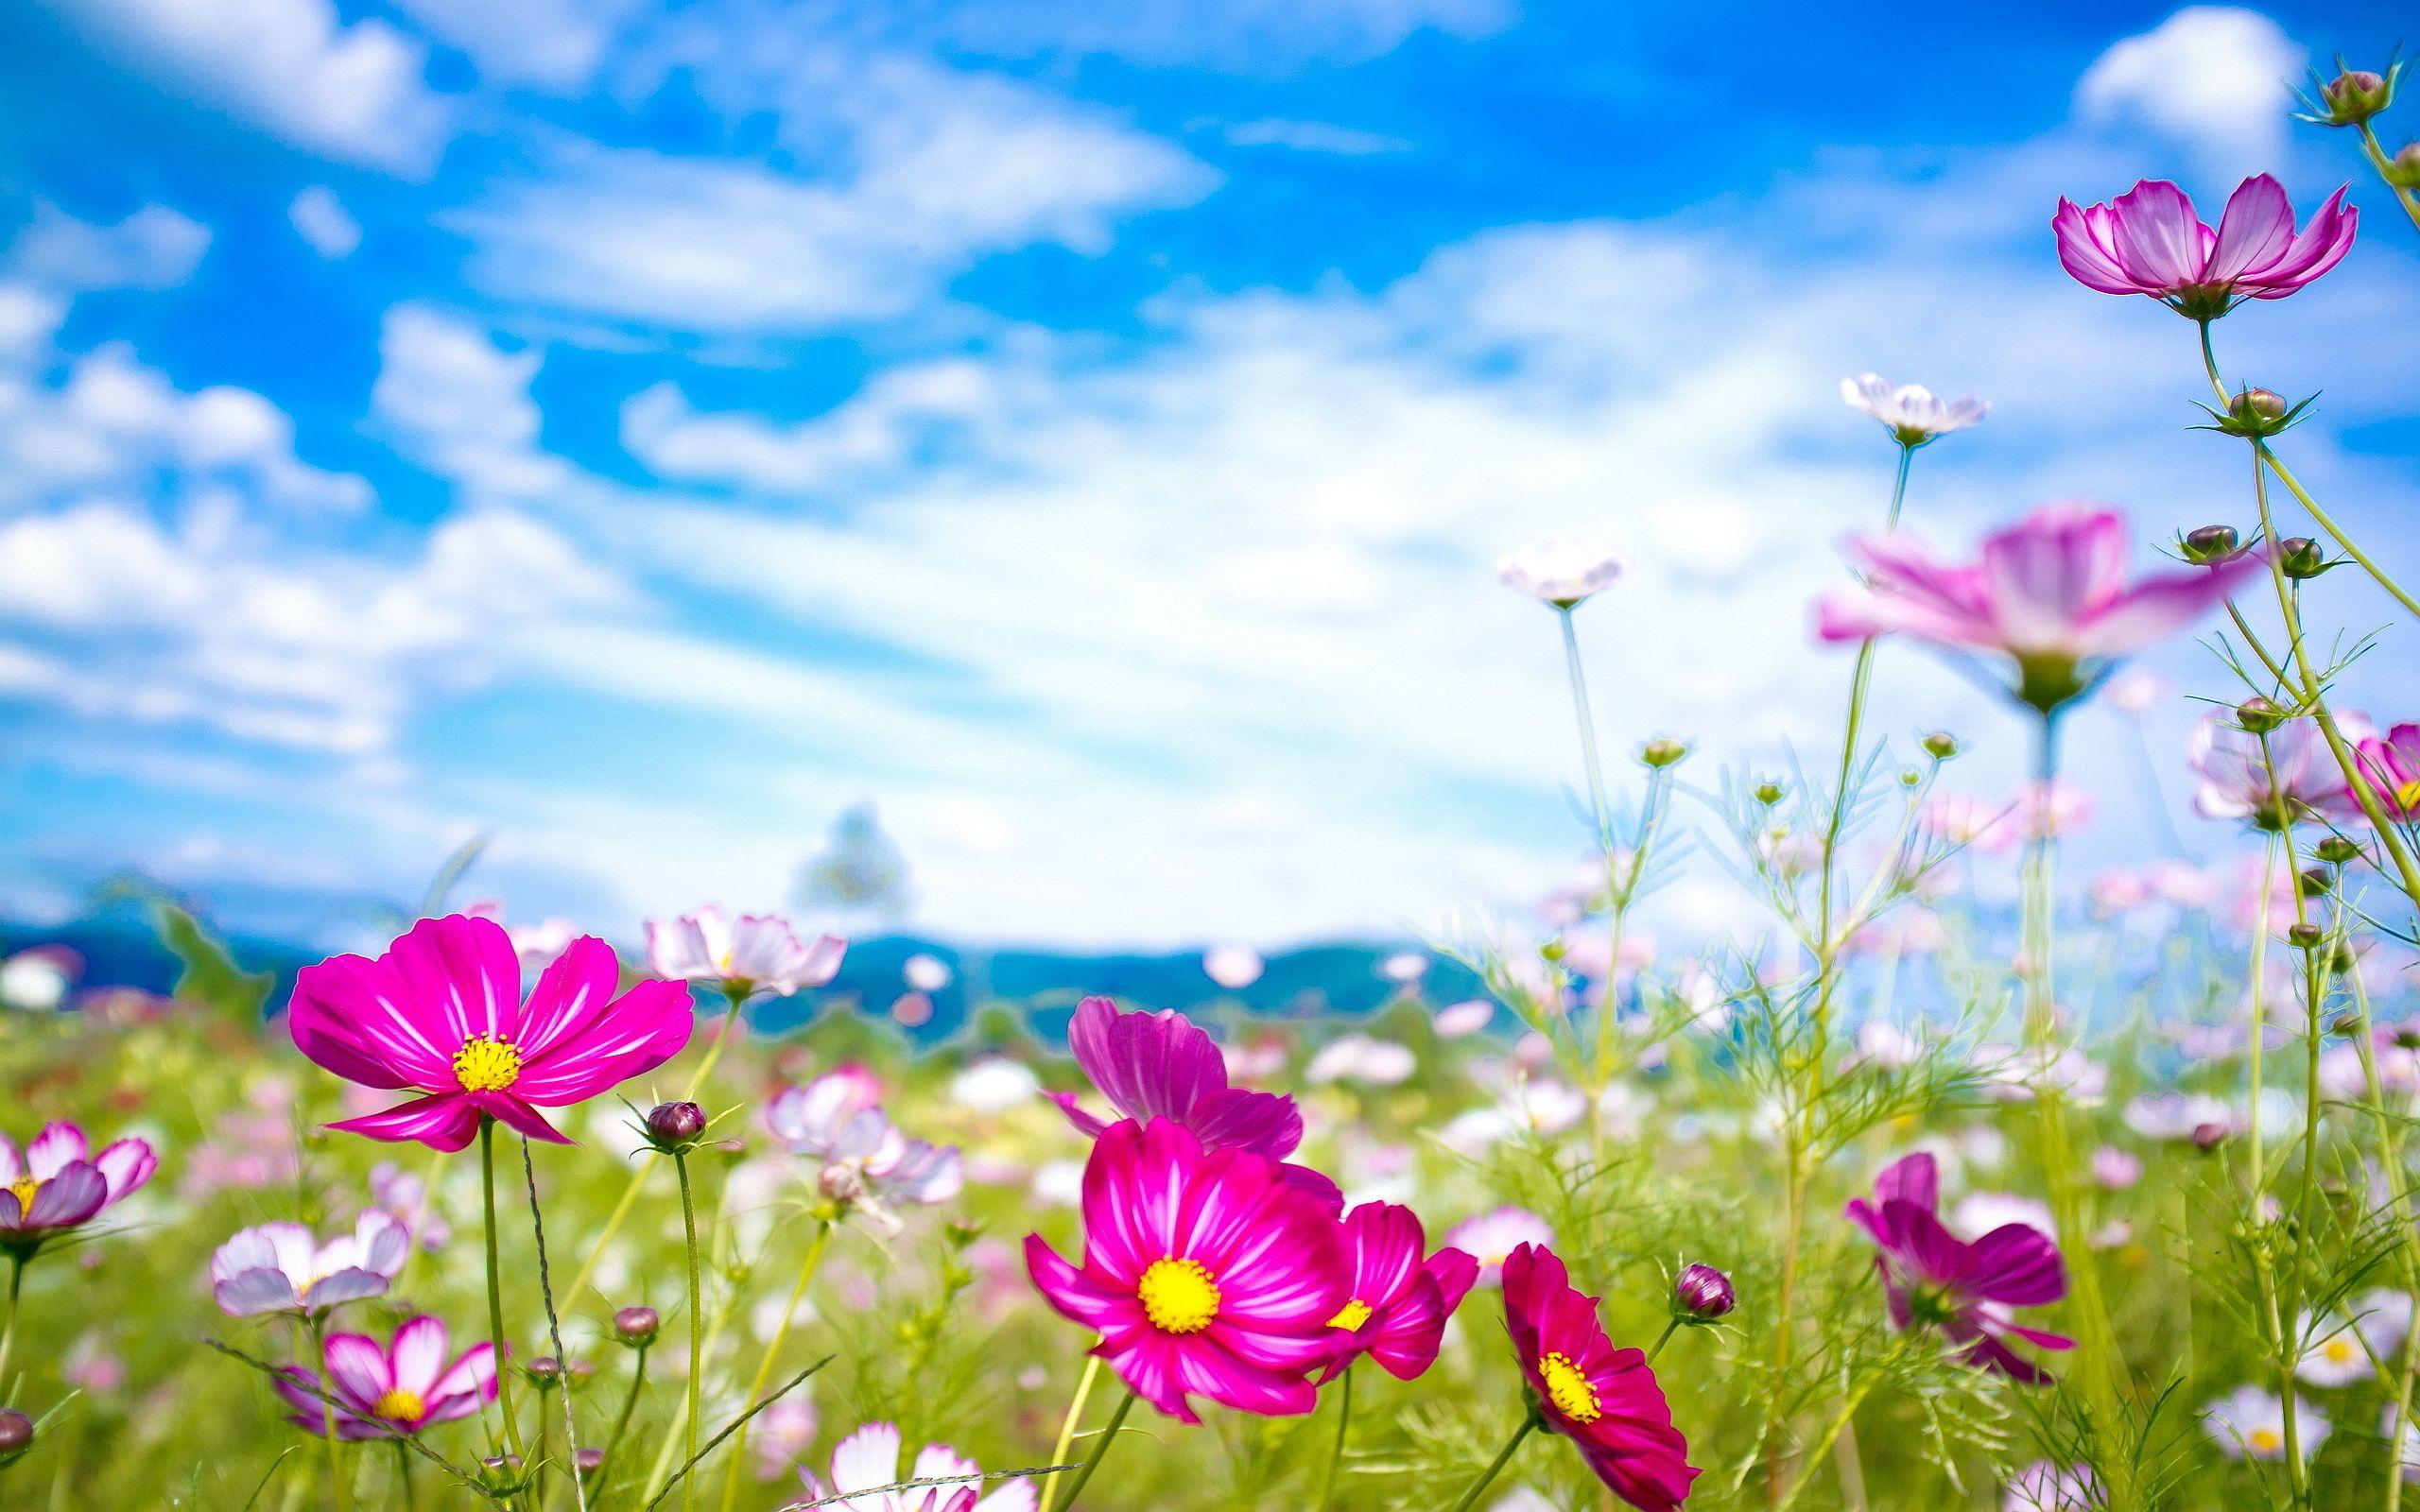 Flower Landscape Wallpapers - Top Free Flower Landscape Backgrounds